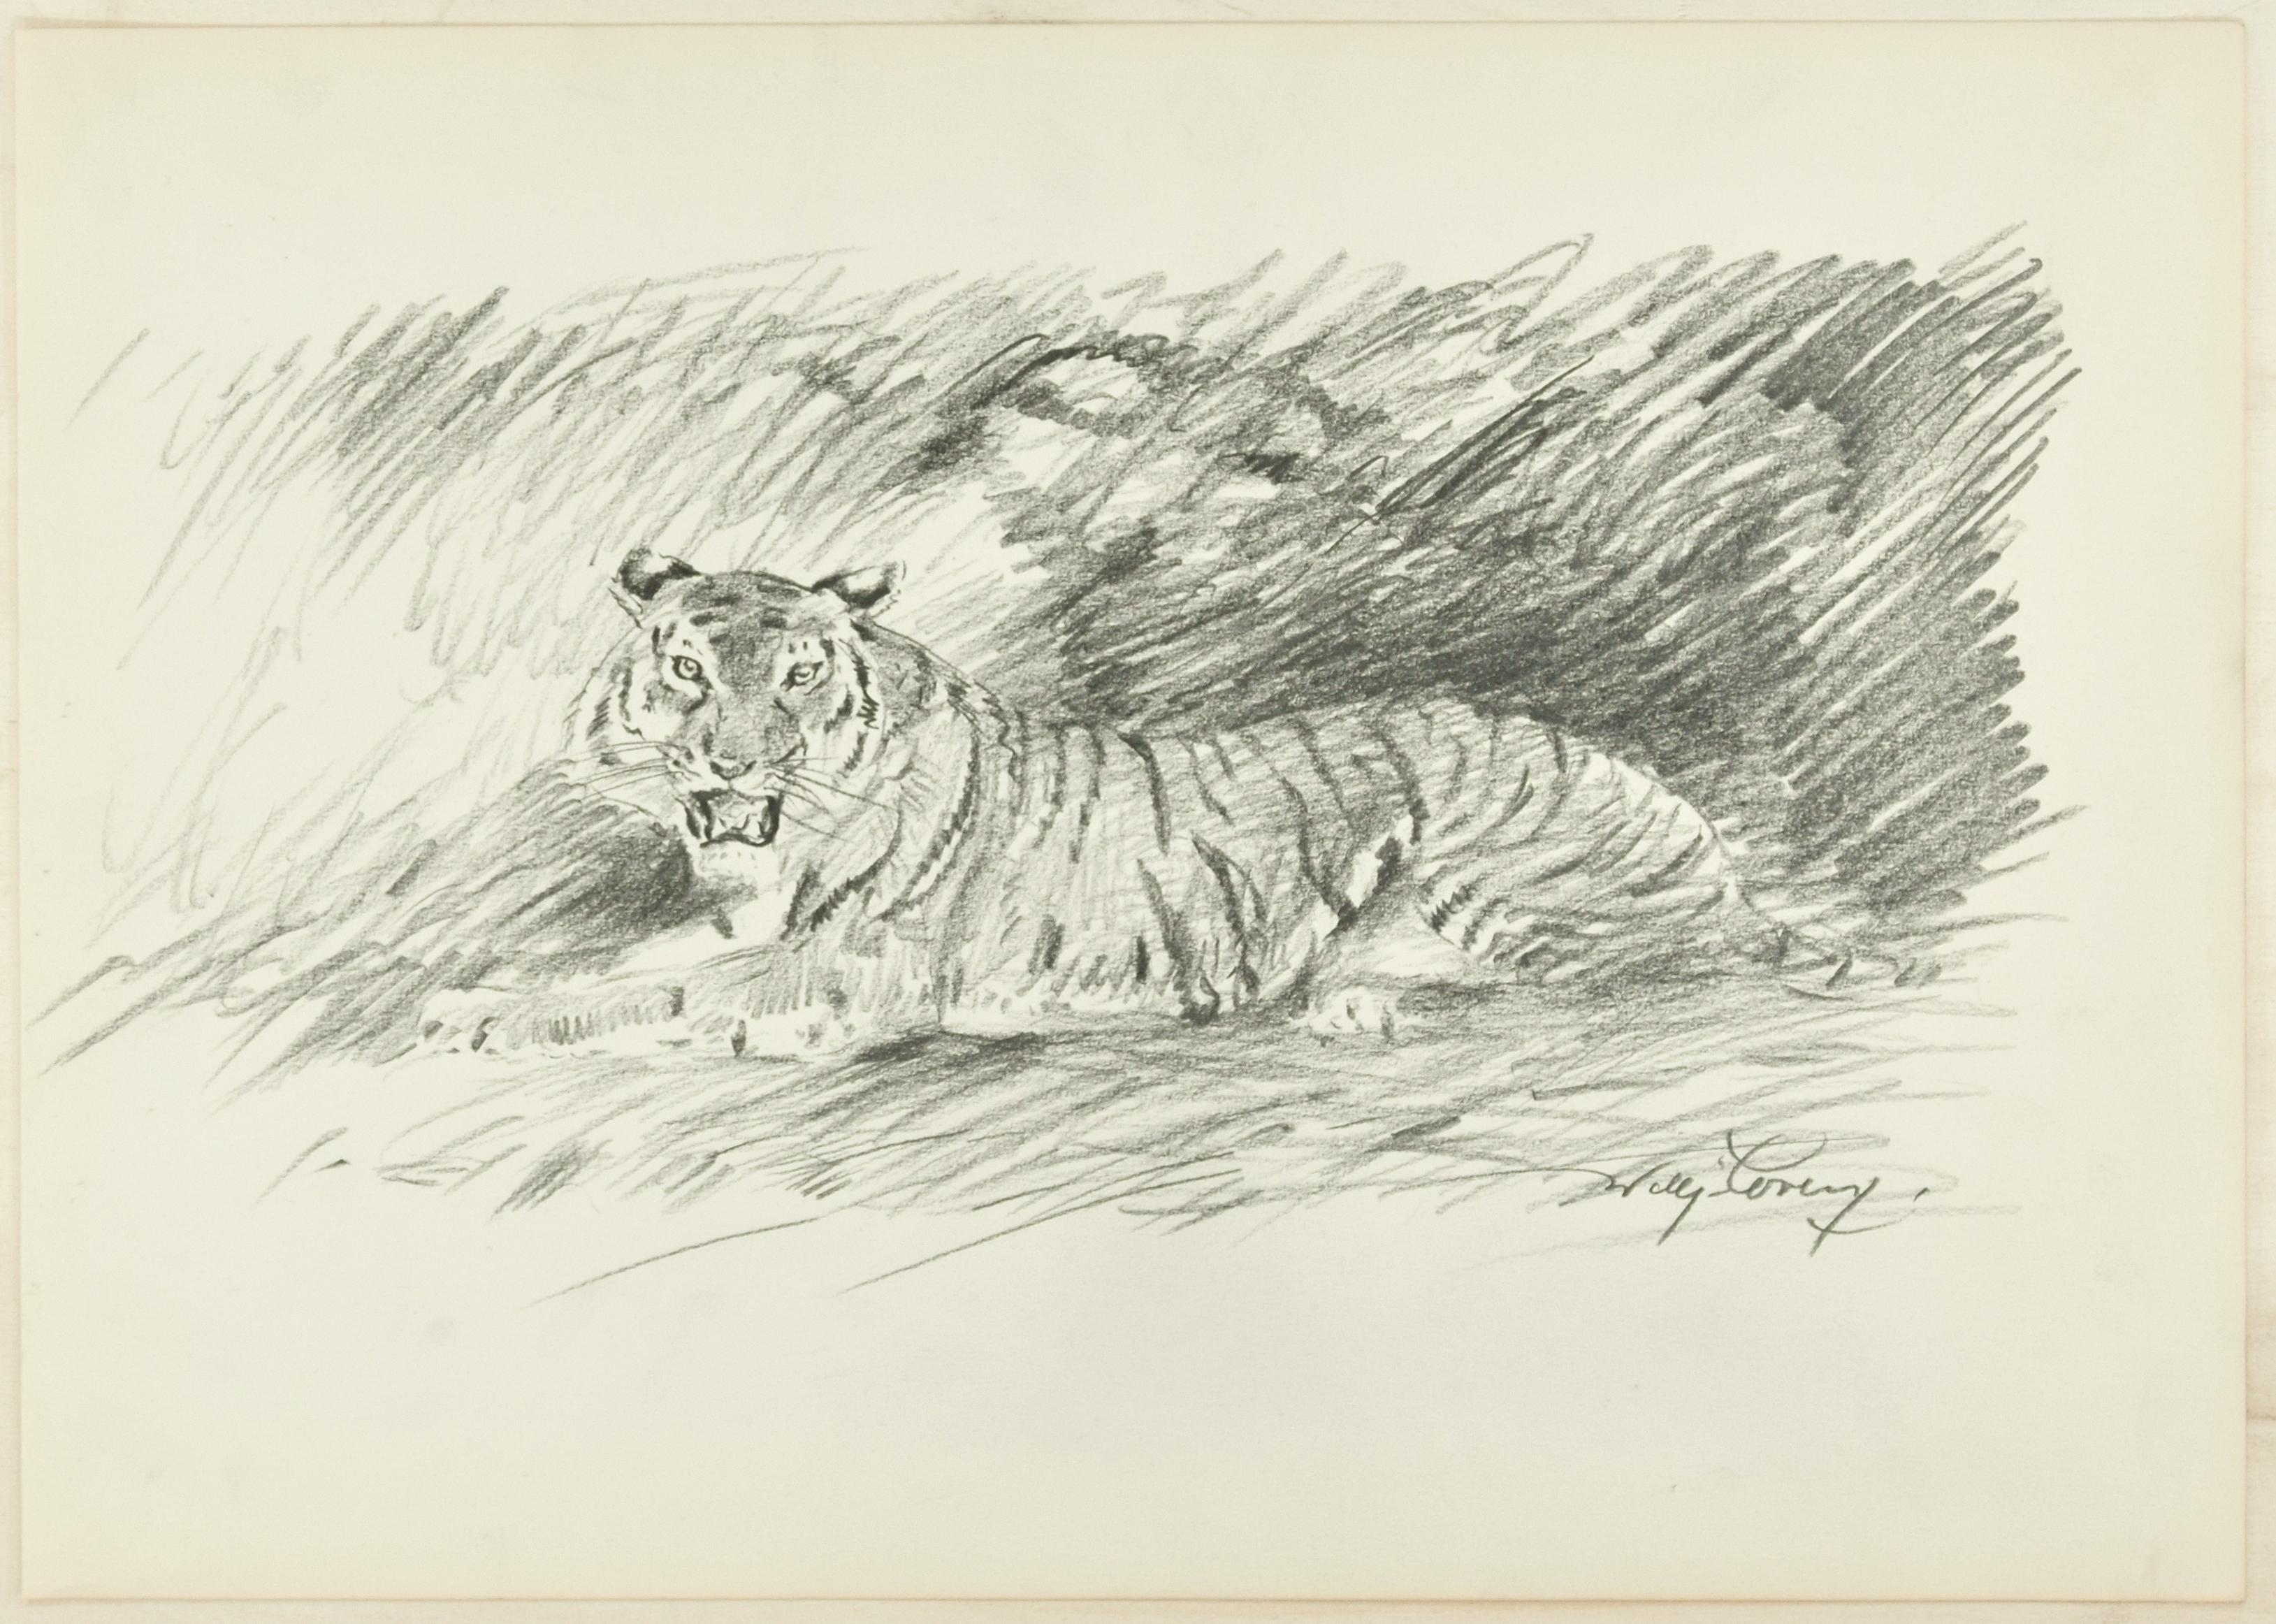 Figurative Art de Wilhelm Lorenz - Tigre rugiente - Dibujo original a lápiz de Willy Lorenz - Años 40